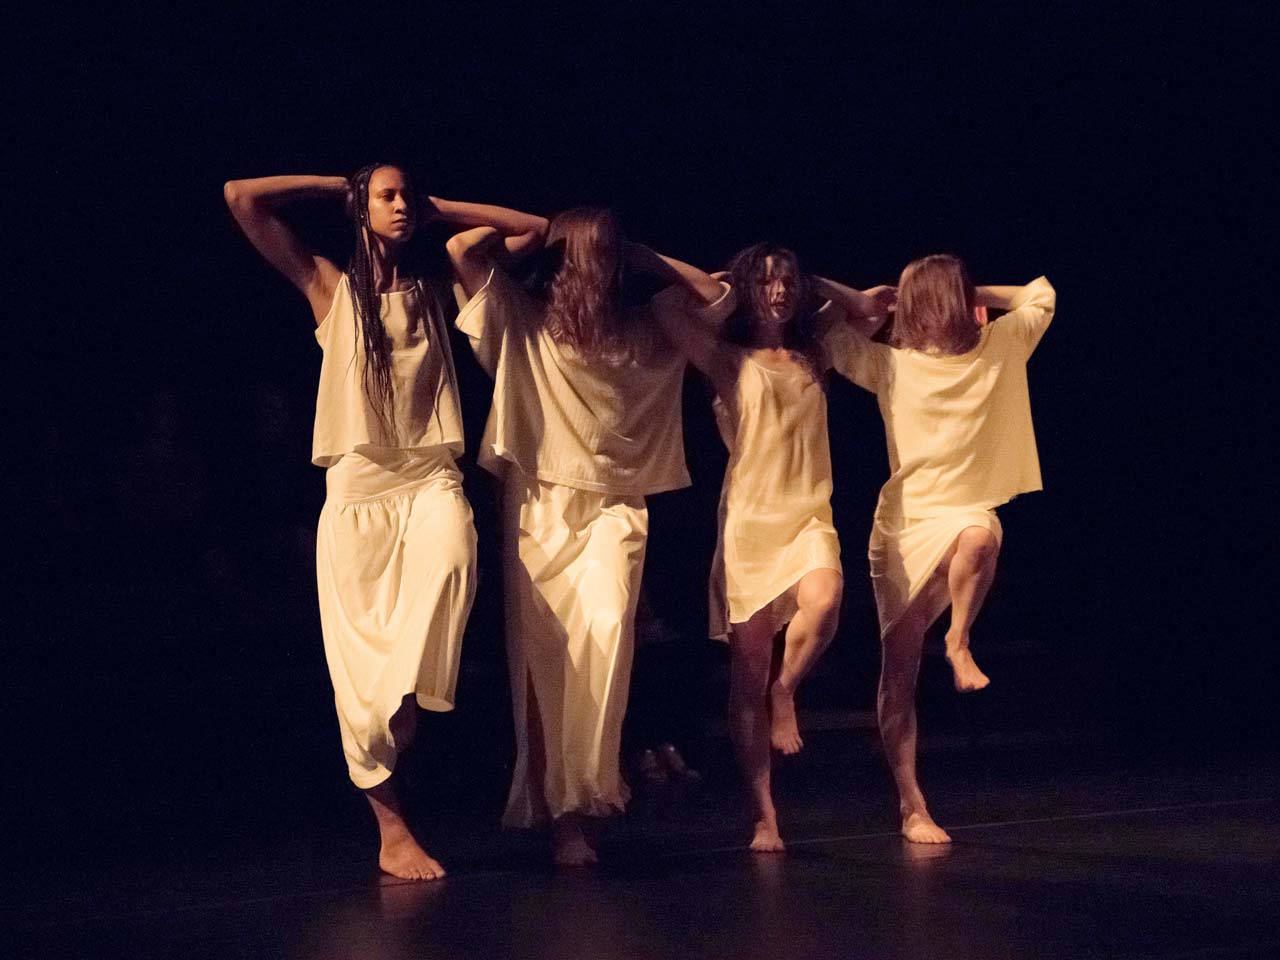 push/FOLD dancers perform Amy Leona Havin's work 'milk' at Union PDX - Festival:19 at the Hampton Opera Center in Portland, Oregon | Photography: Jingzi Zhao